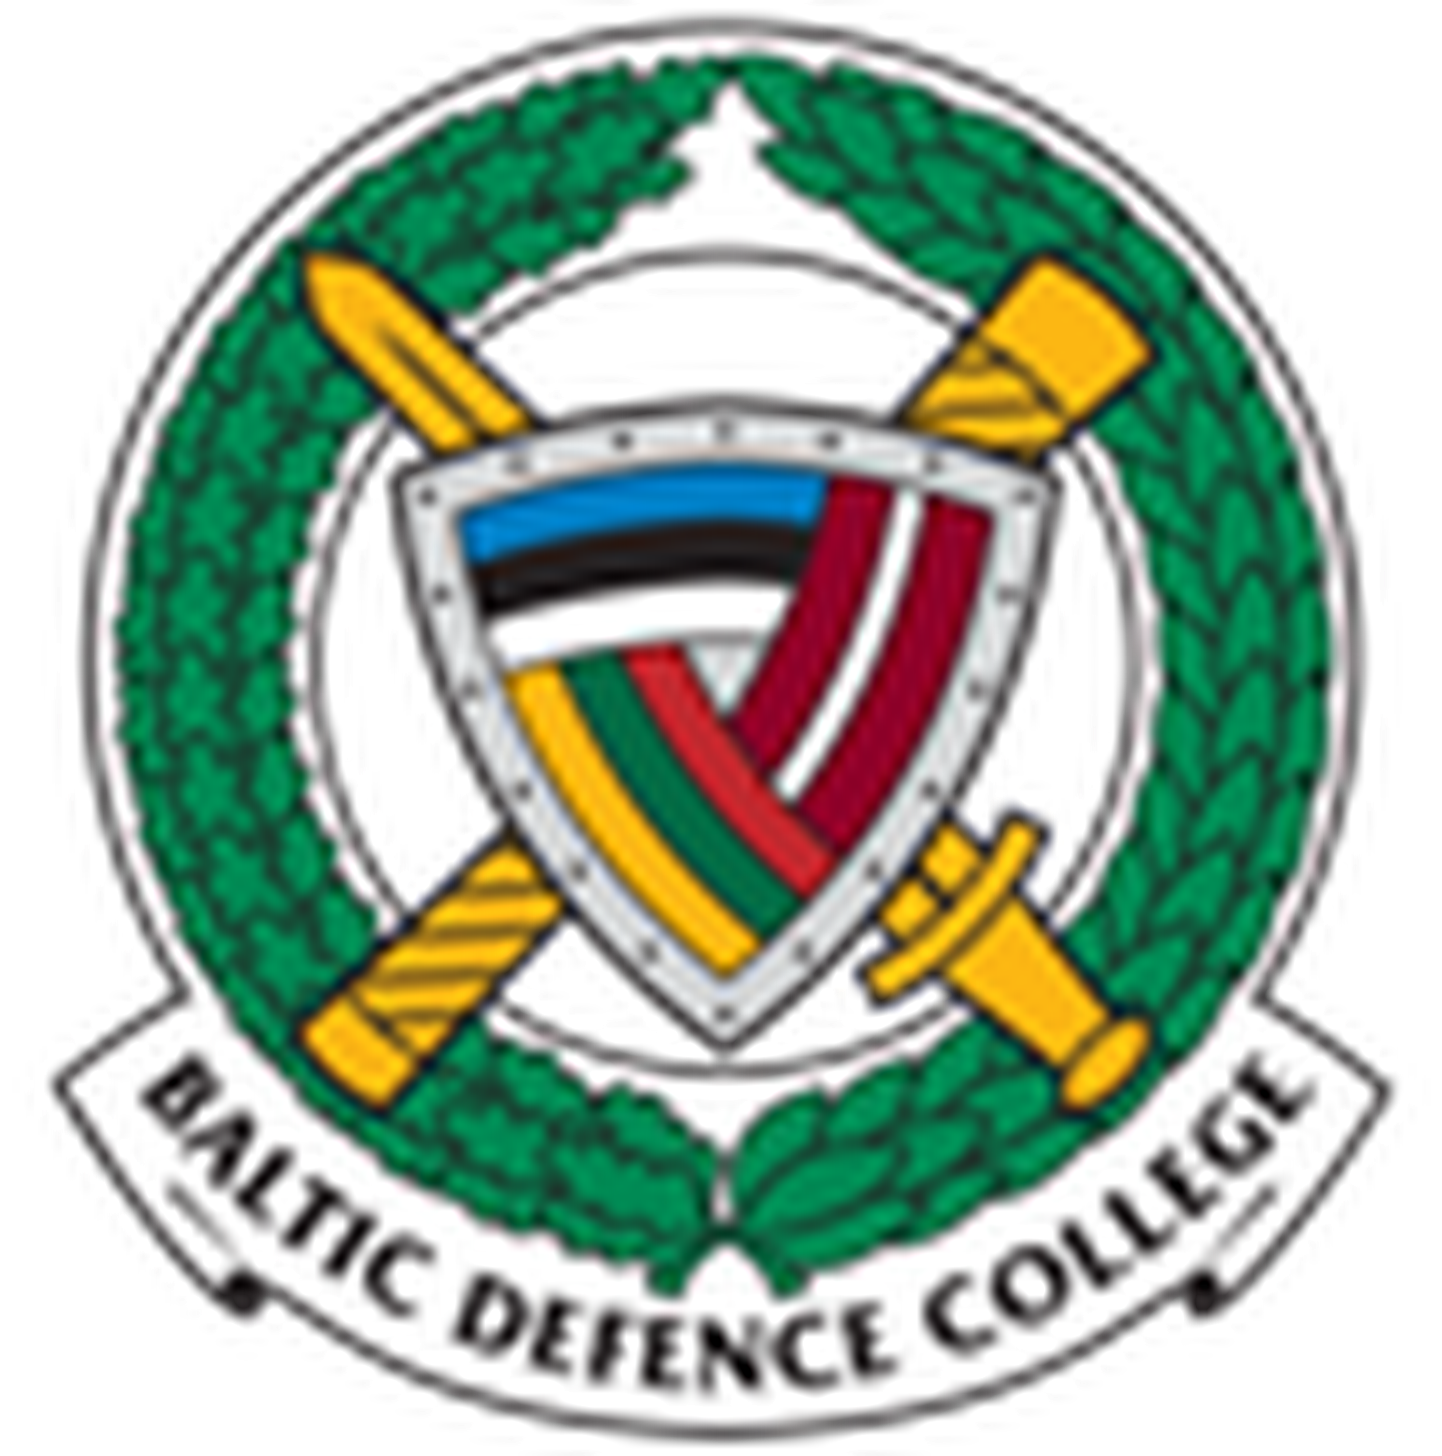 Balti Kaitsekolledži logo.